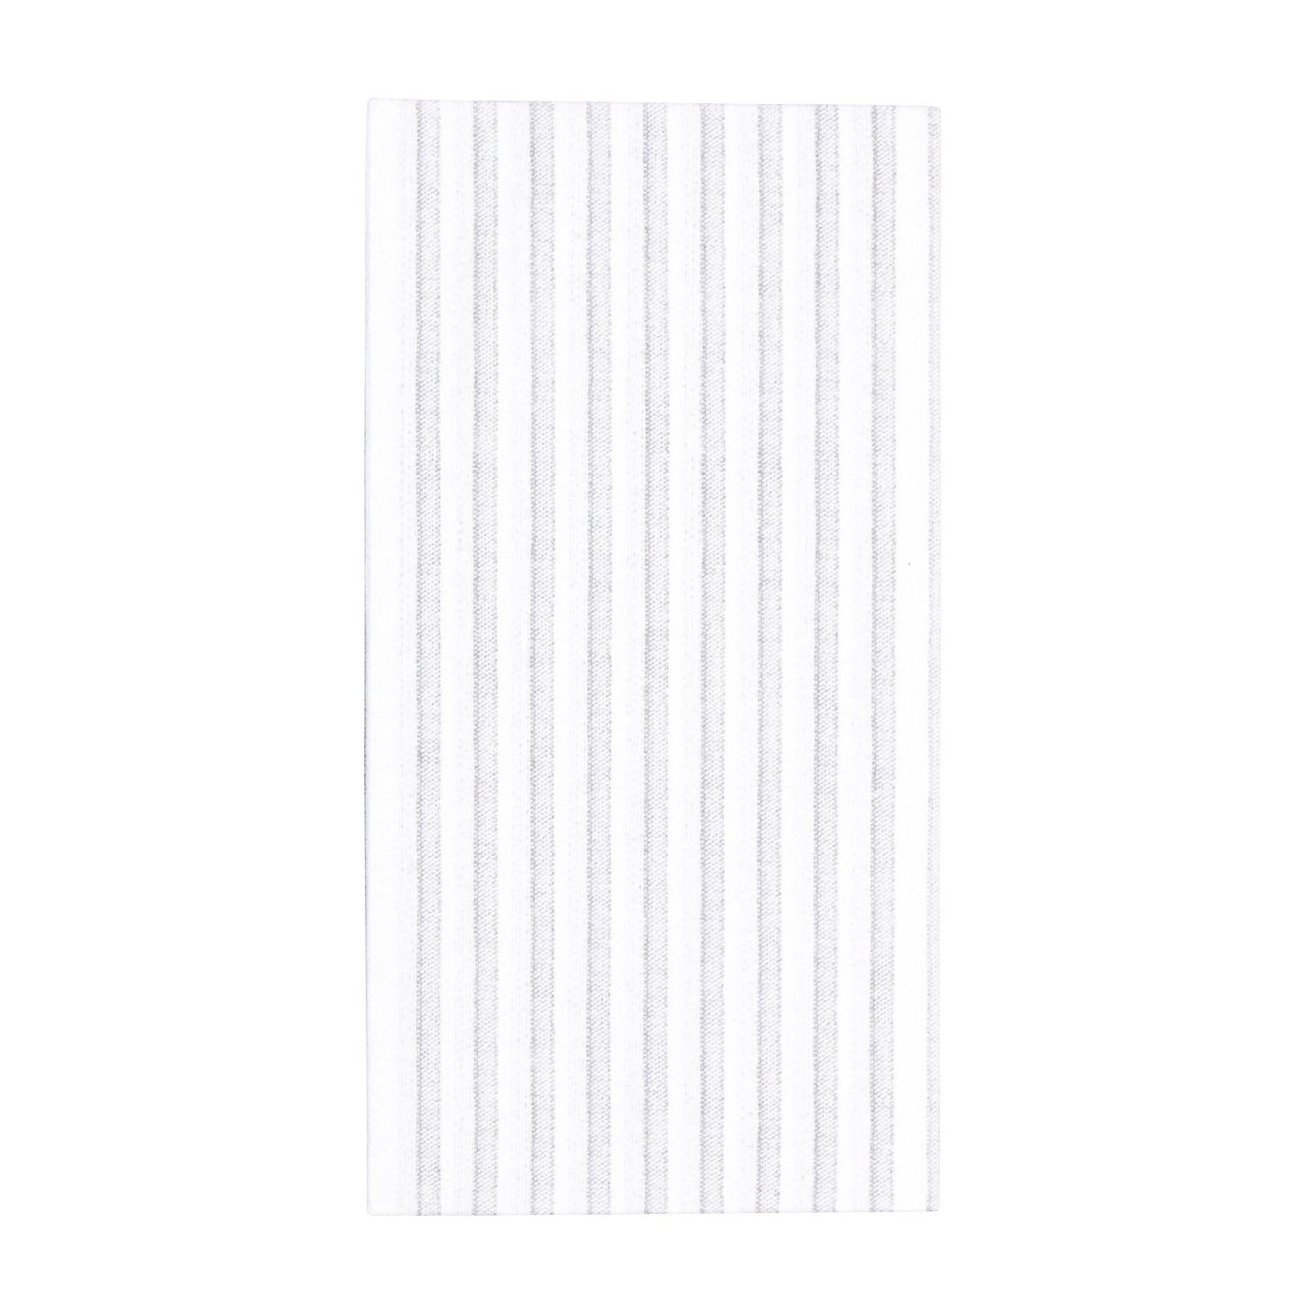 Vietri Papersoft Napkins Capri Guest Towels (Set of 50) - Light Gray